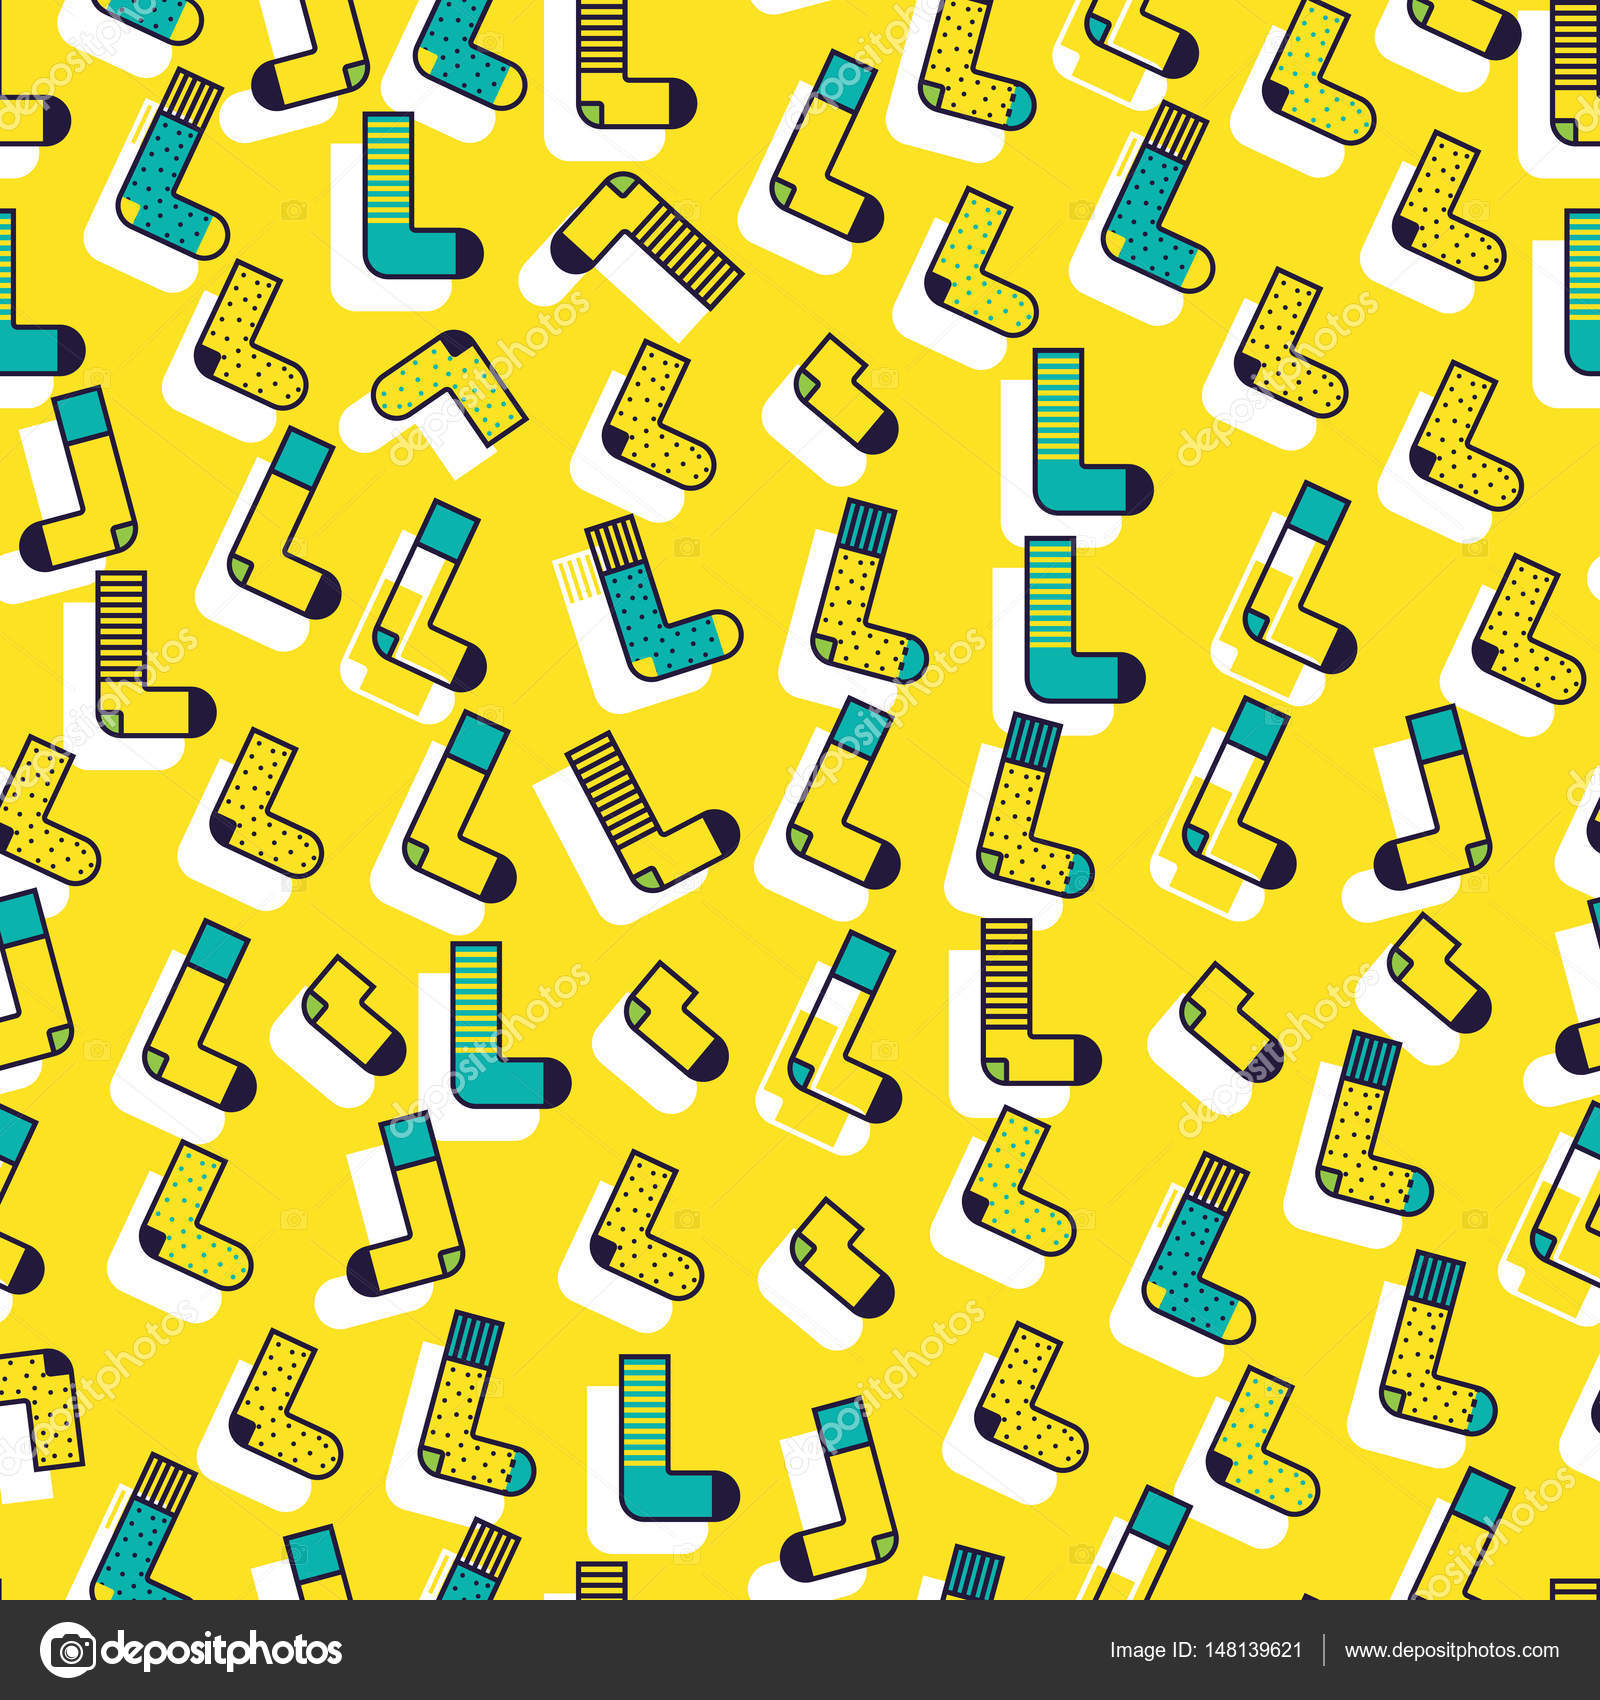 https://st3.depositphotos.com/4831367/14813/v/1600/depositphotos_148139621-stock-illustration-cute-colorful-background-socks-pattern.jpg